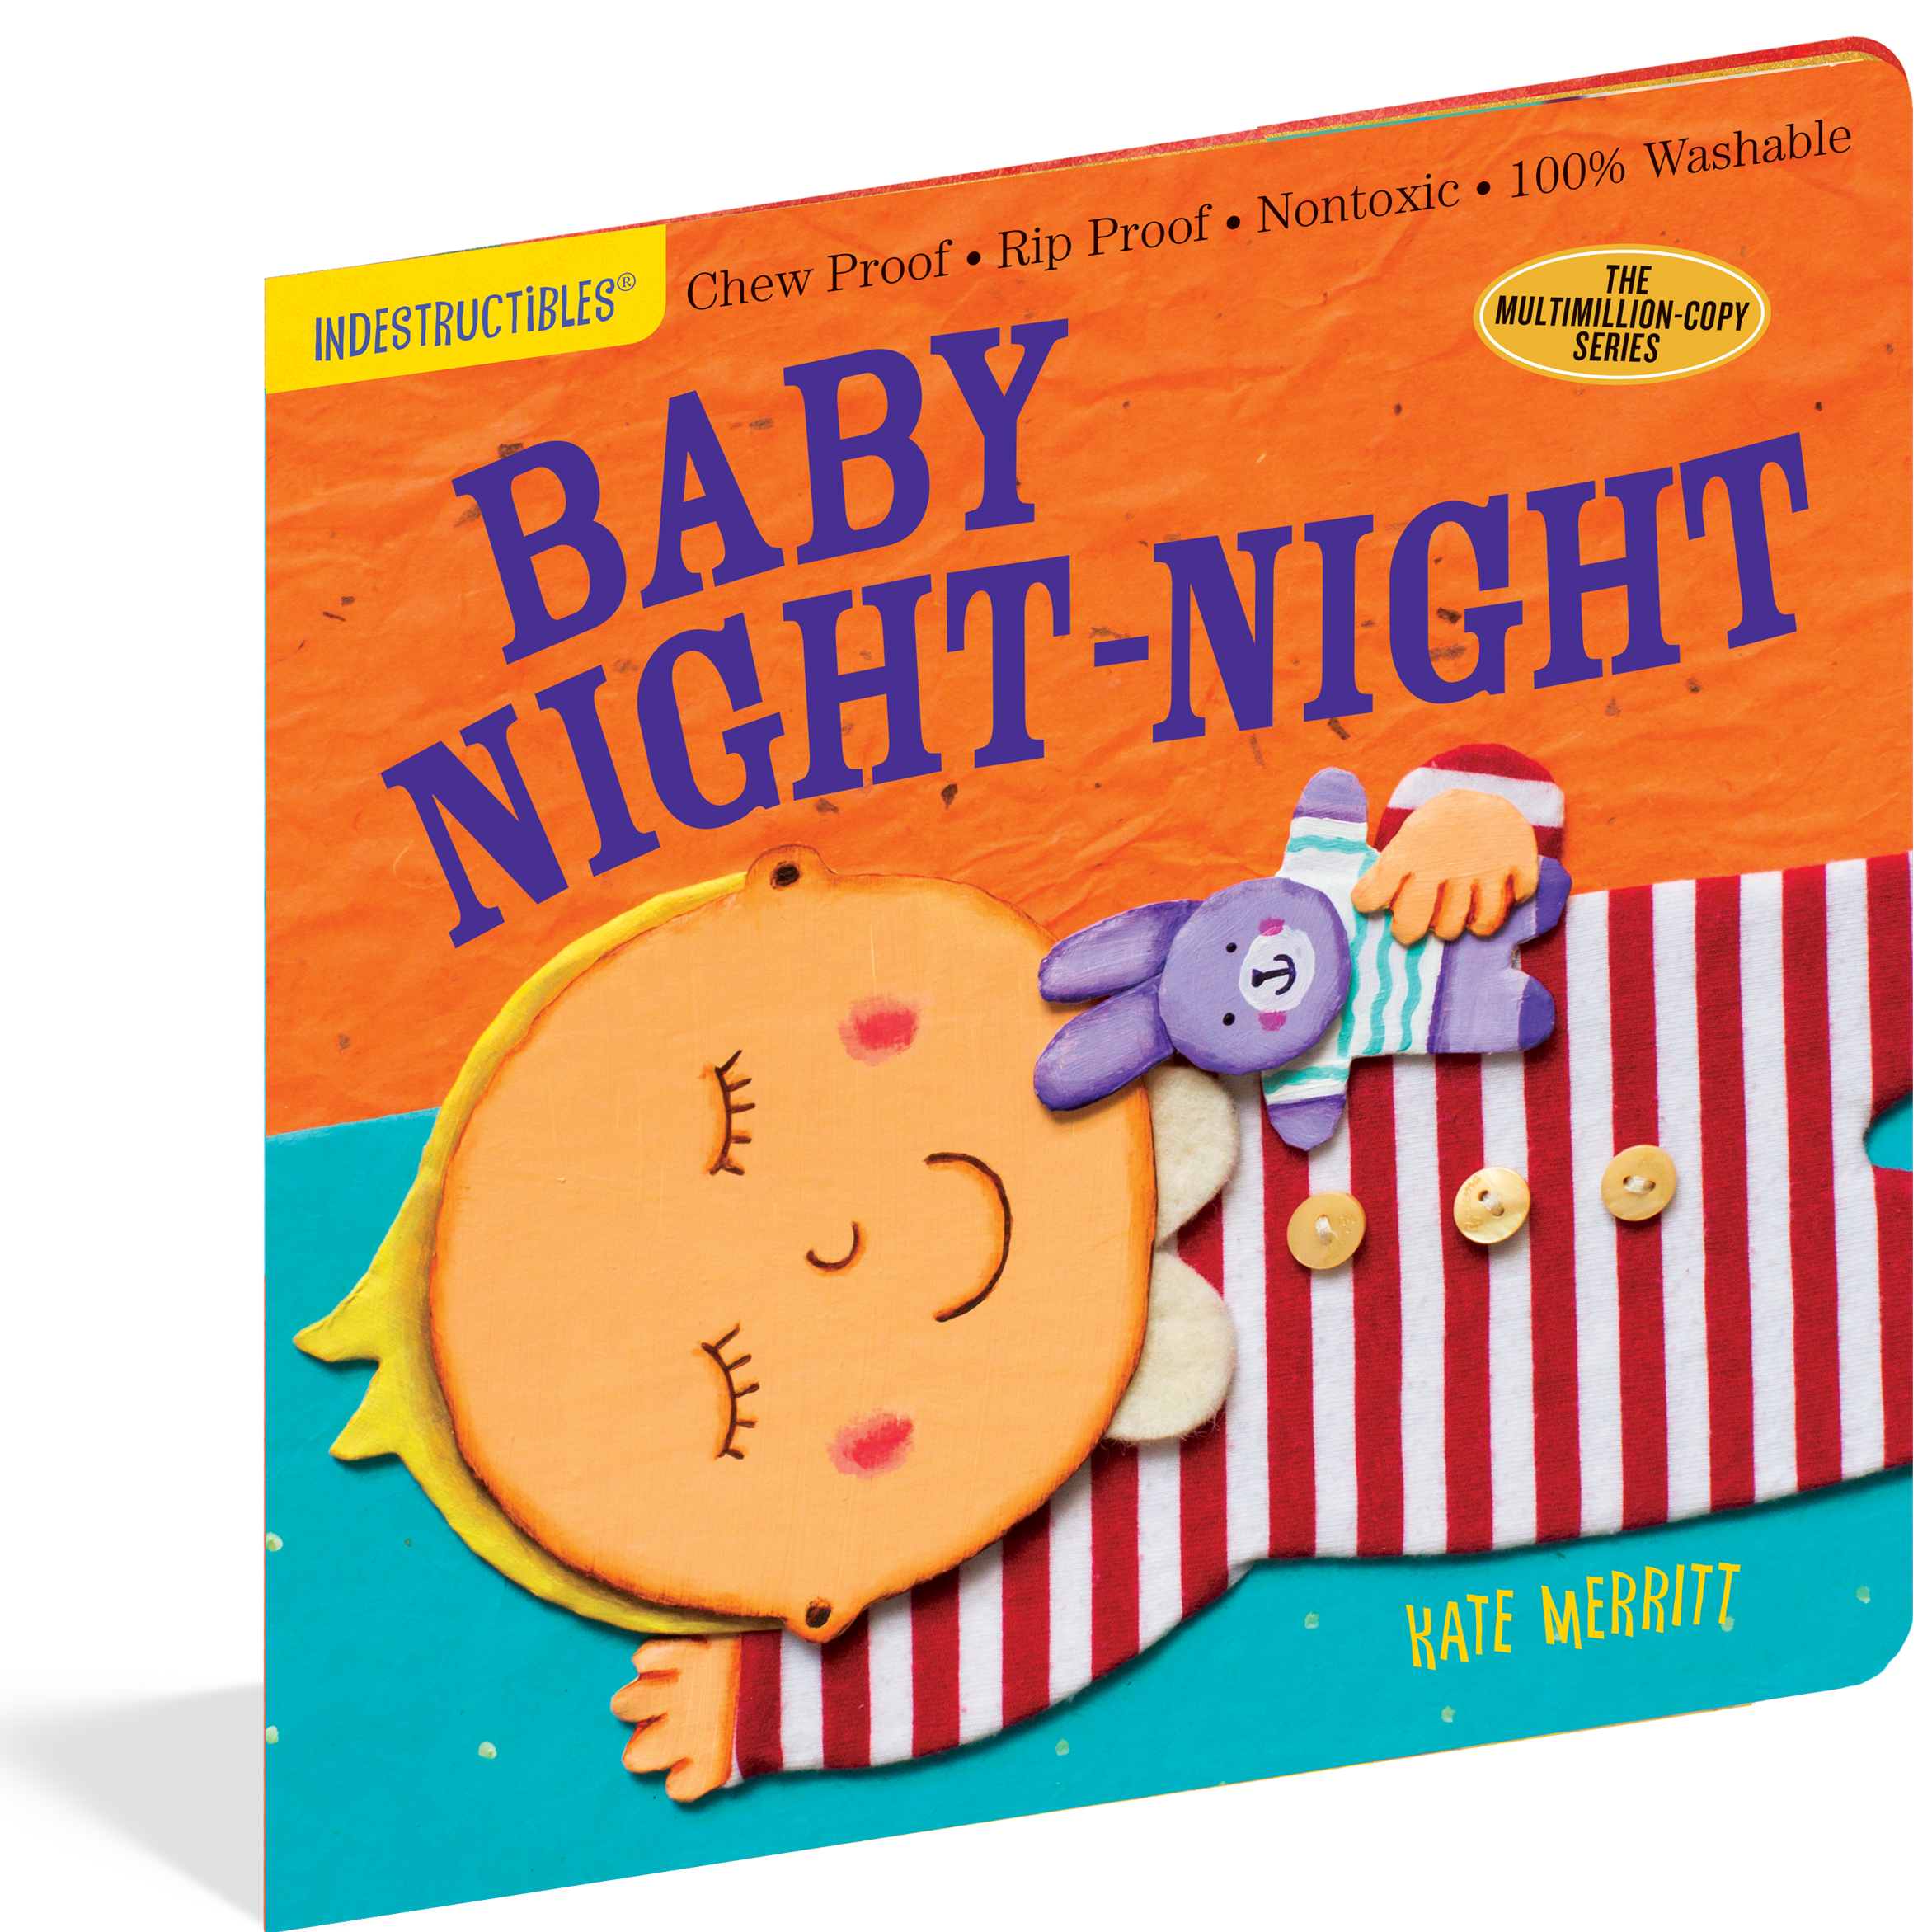 Baby Night-Night Indestructible Book